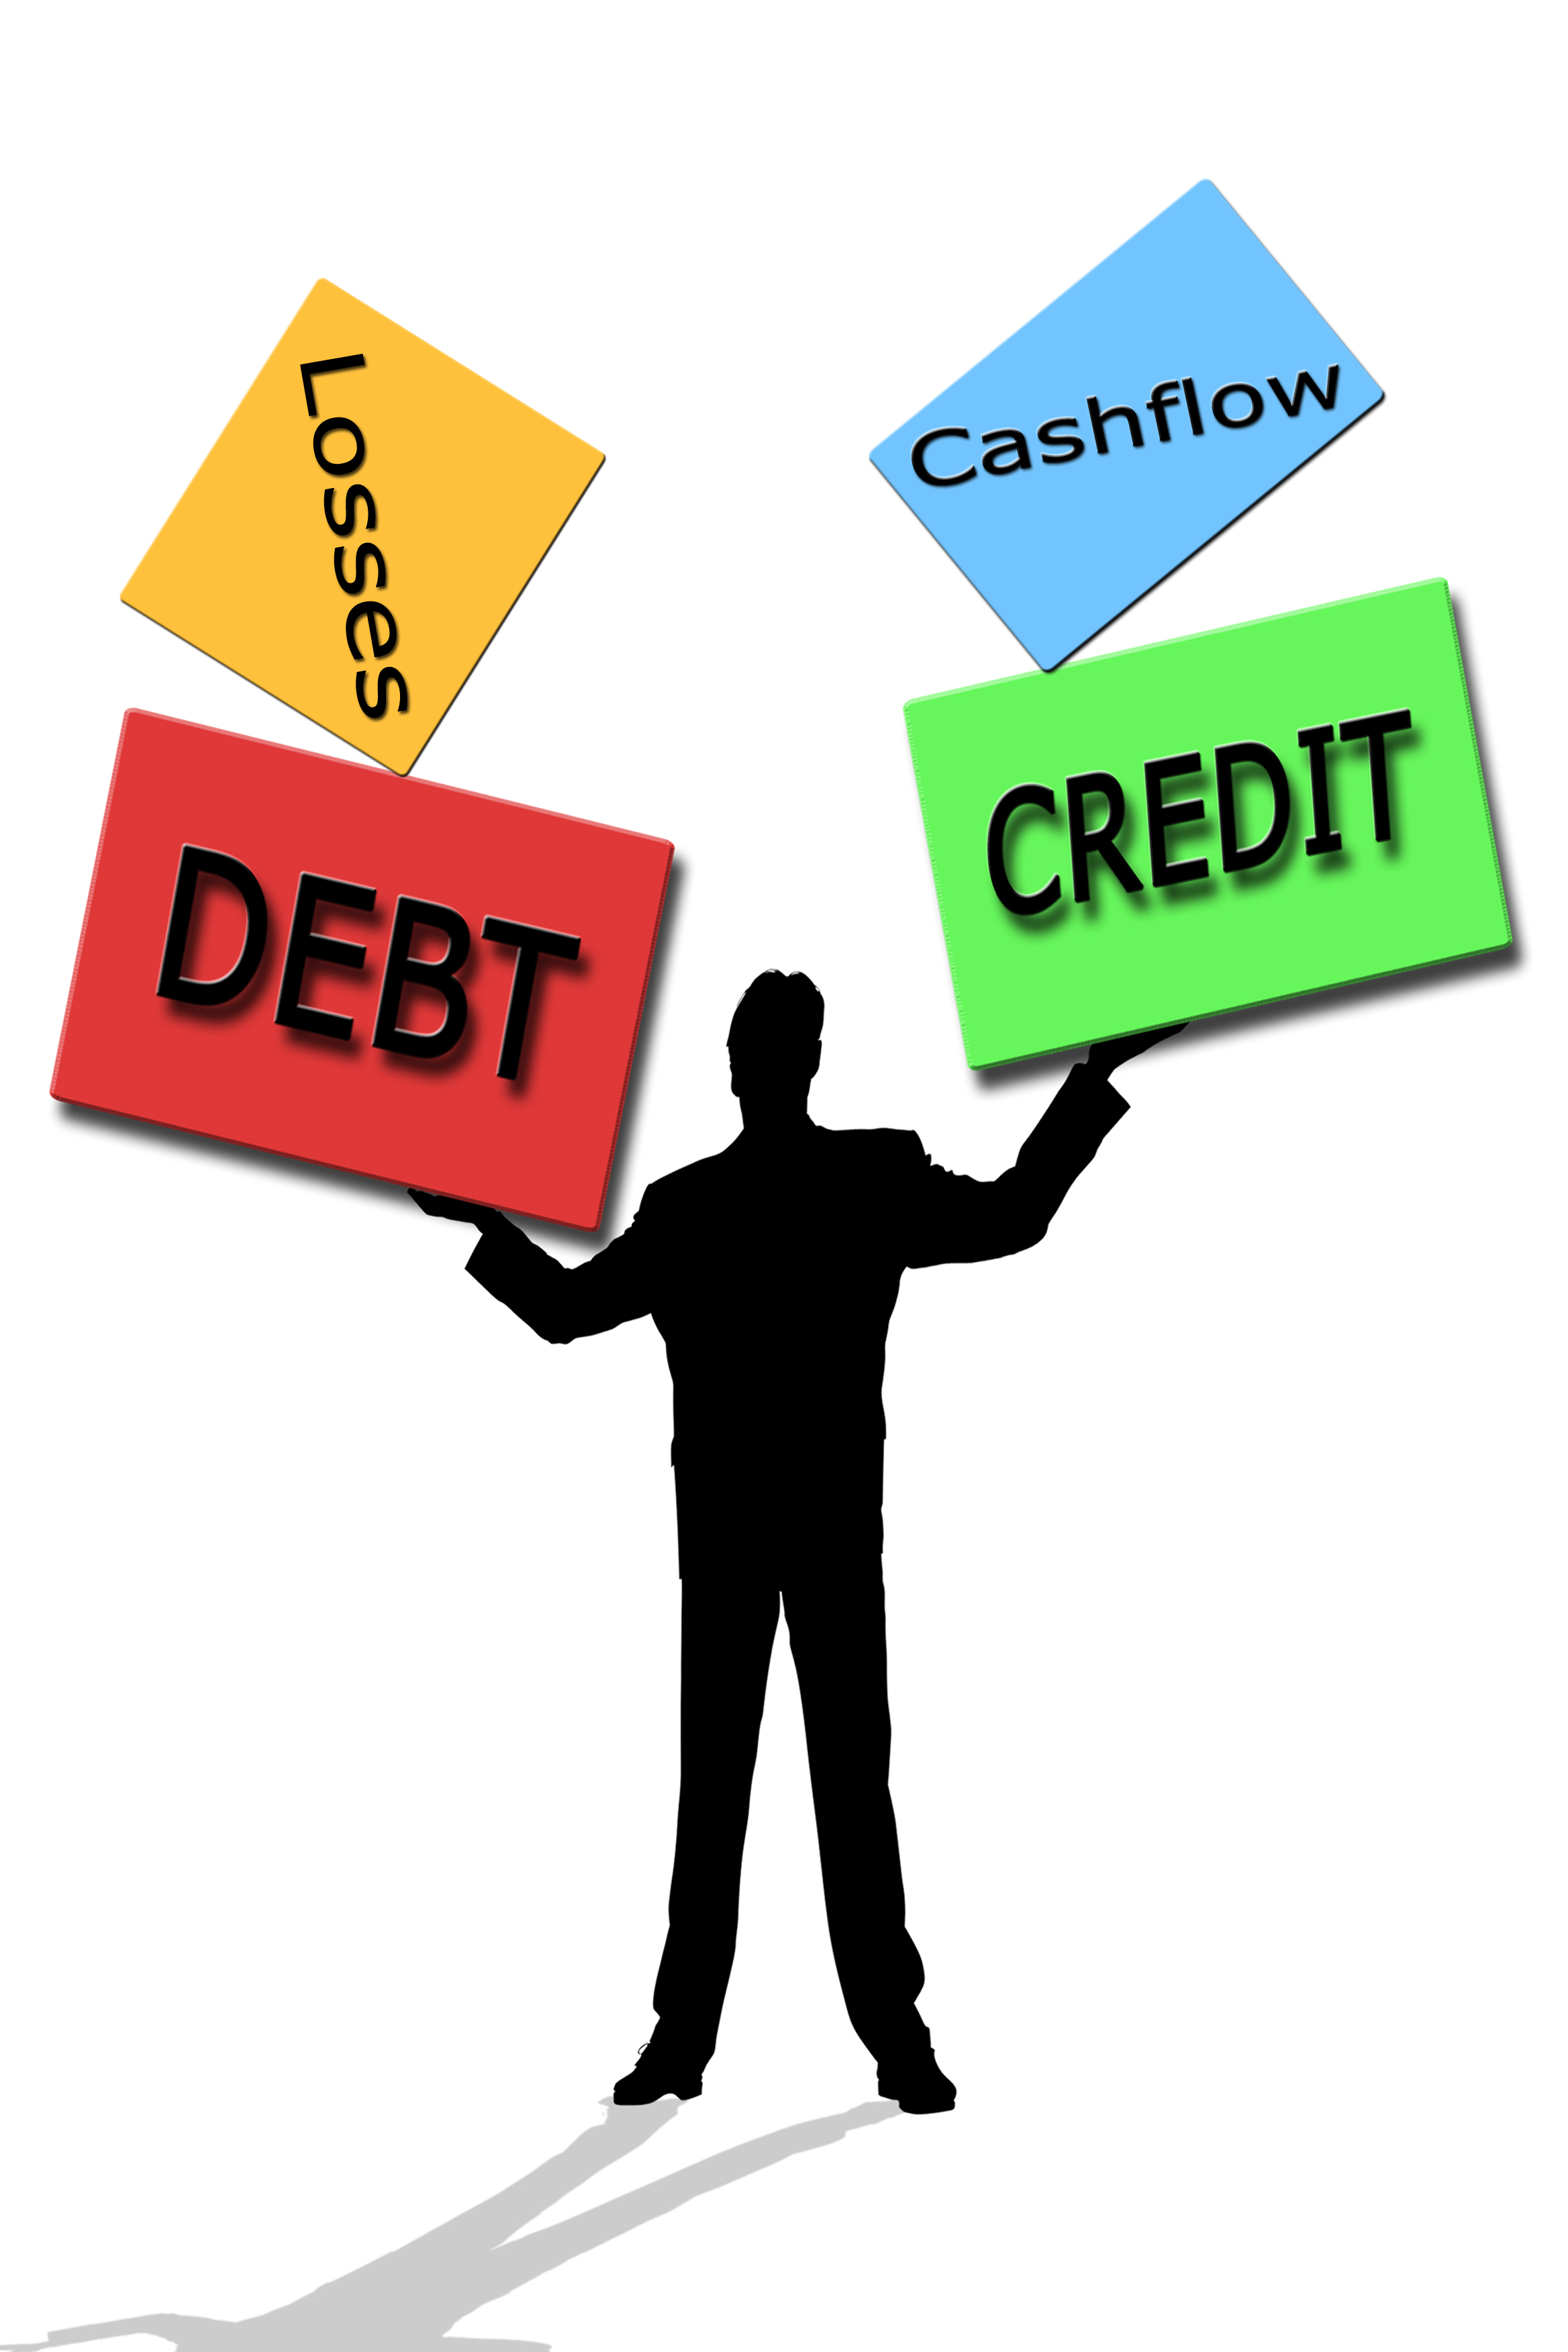 Credit Card Debt: Where the Problem Lies